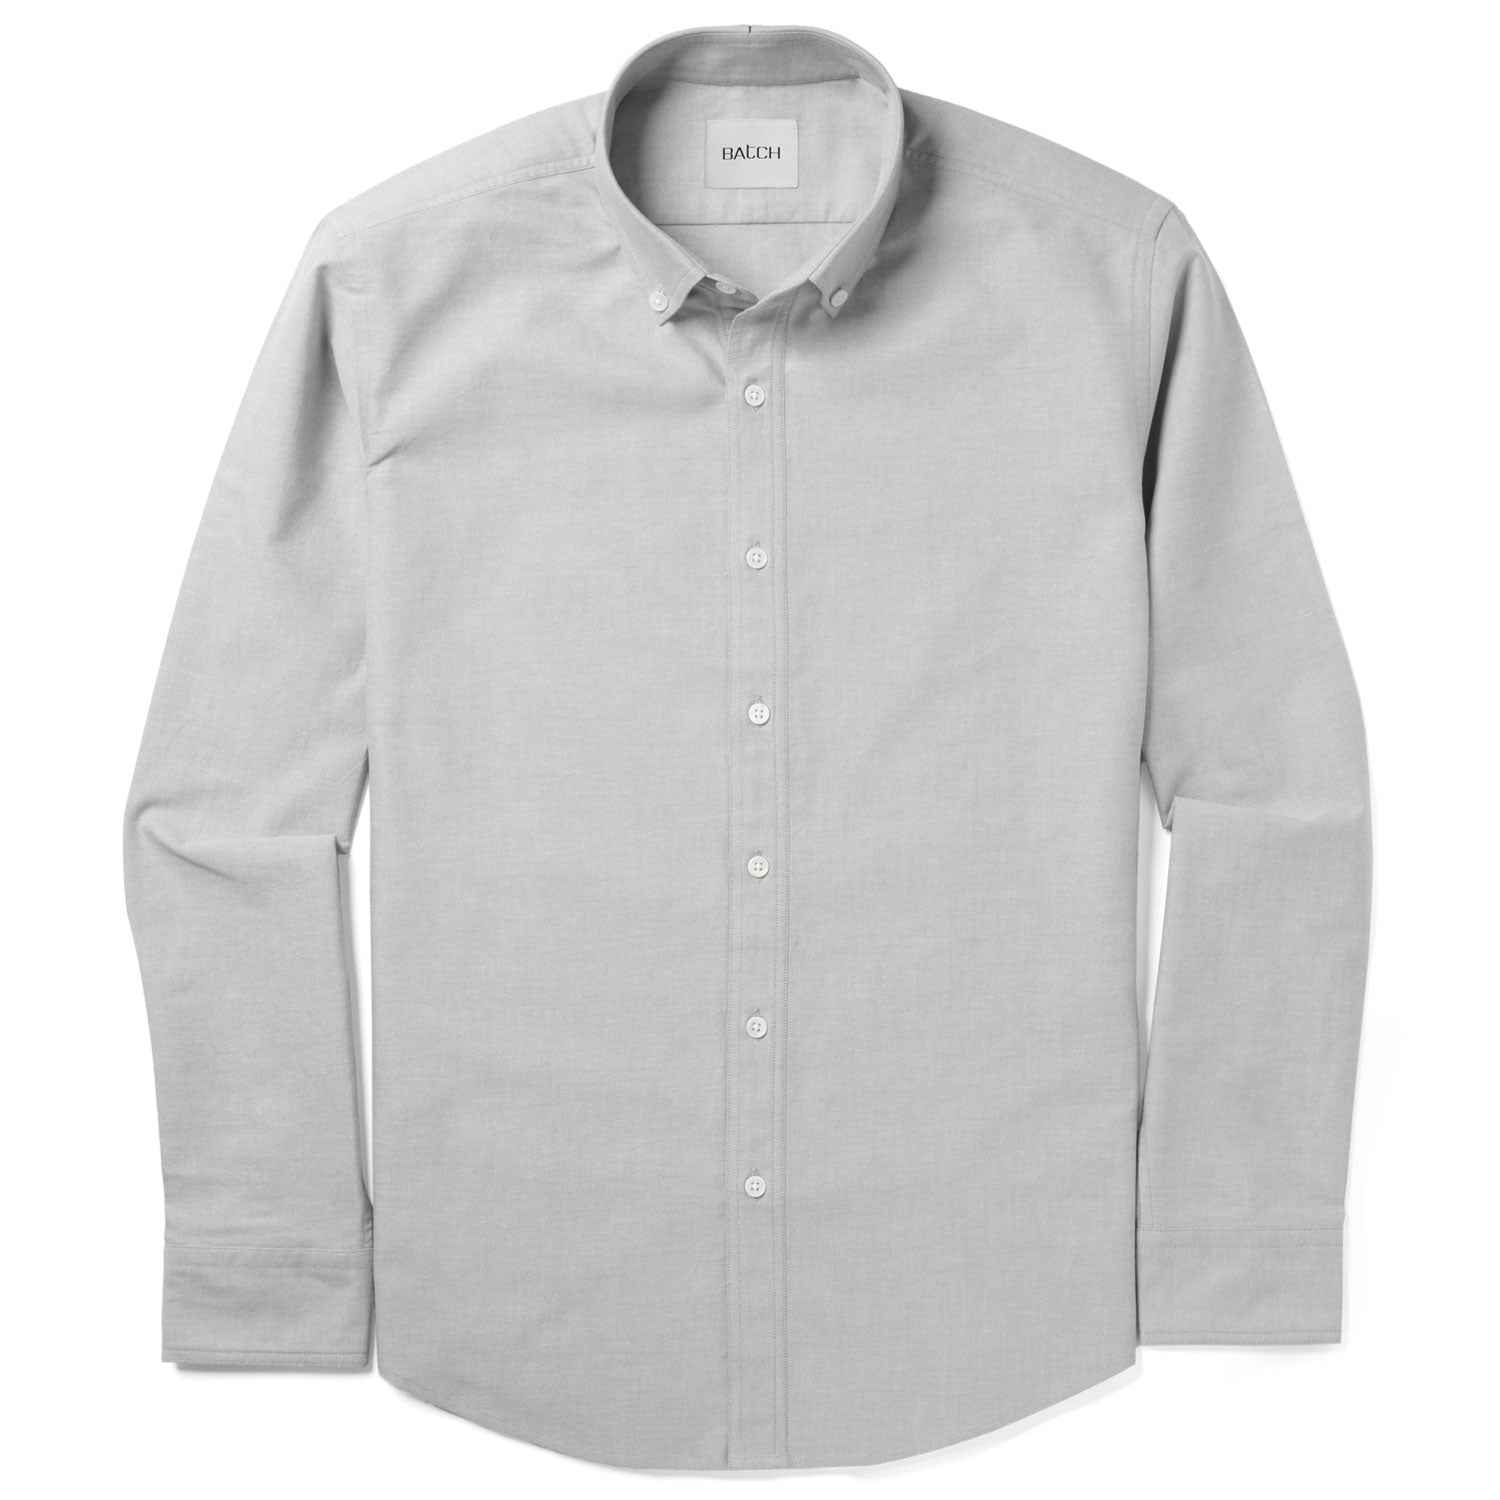 Essential Casual Shirt - Aluminum Gray Cotton Oxford